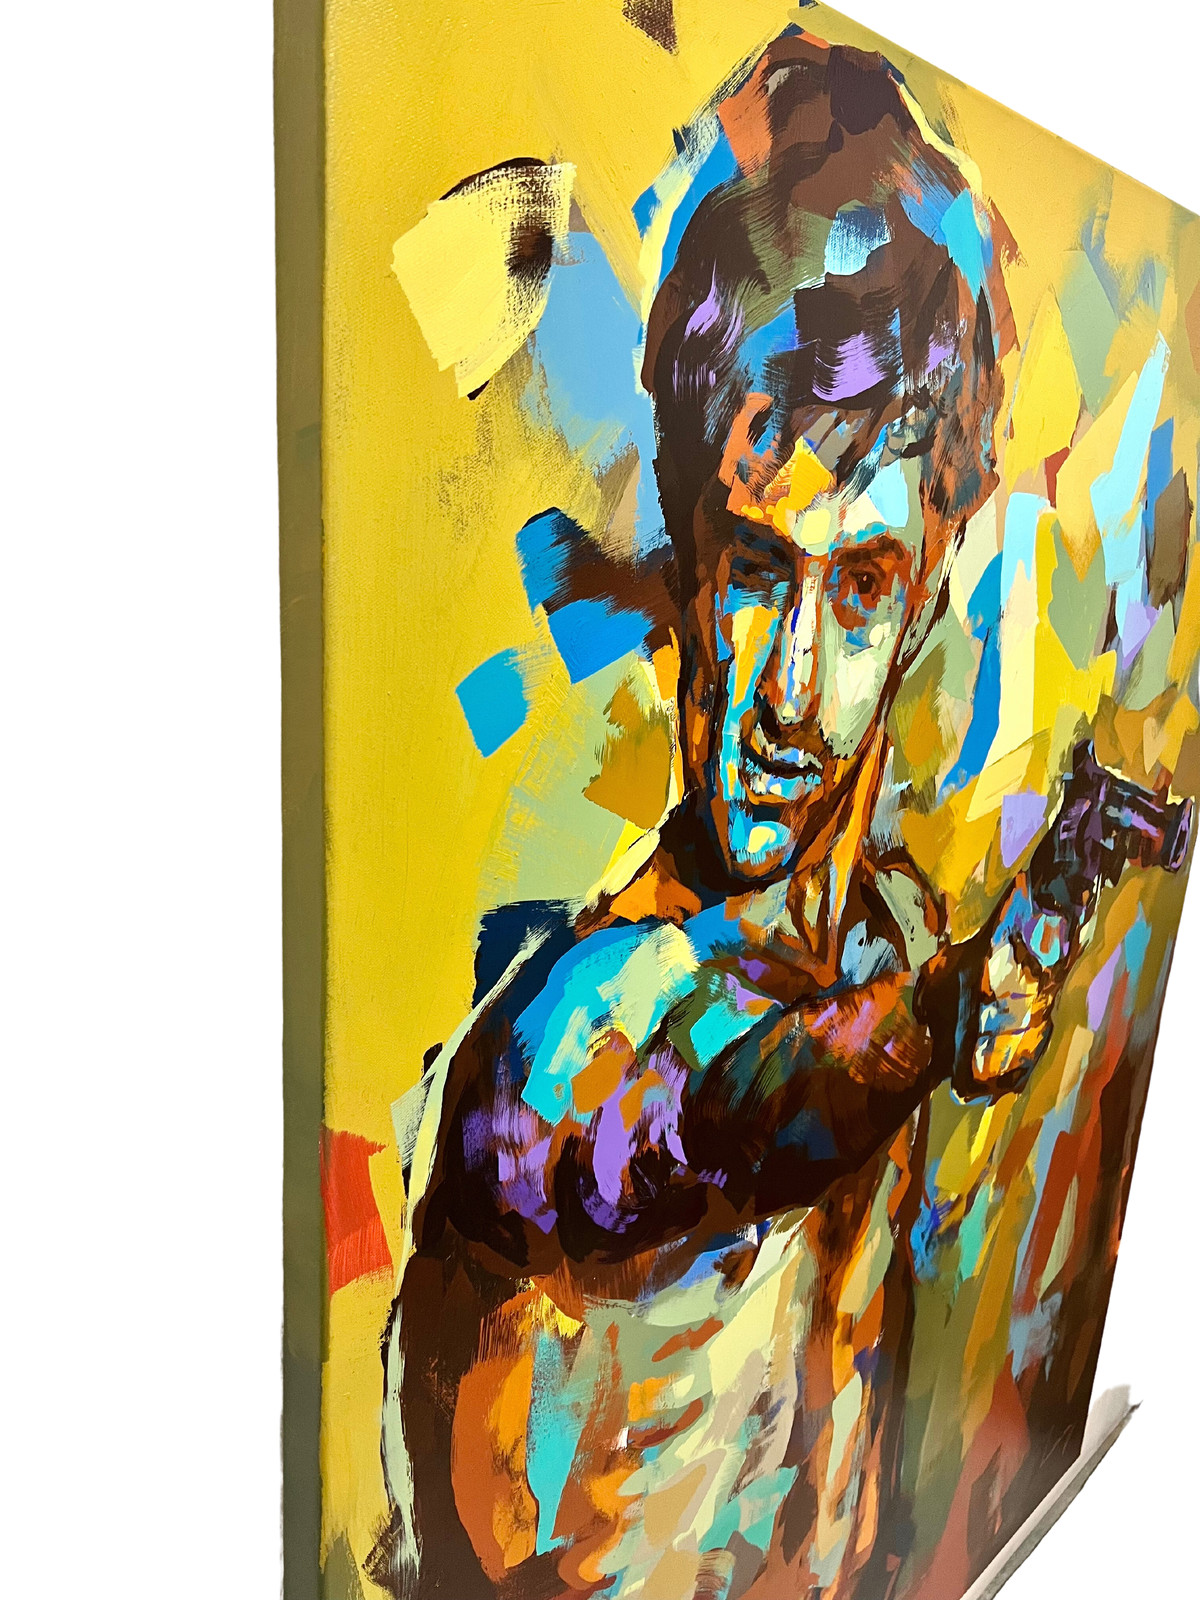 "Taxi Driver" (Robert De Niro) Akrylmålning på duk av Alberto Ramirez LEG. 130x160 cm